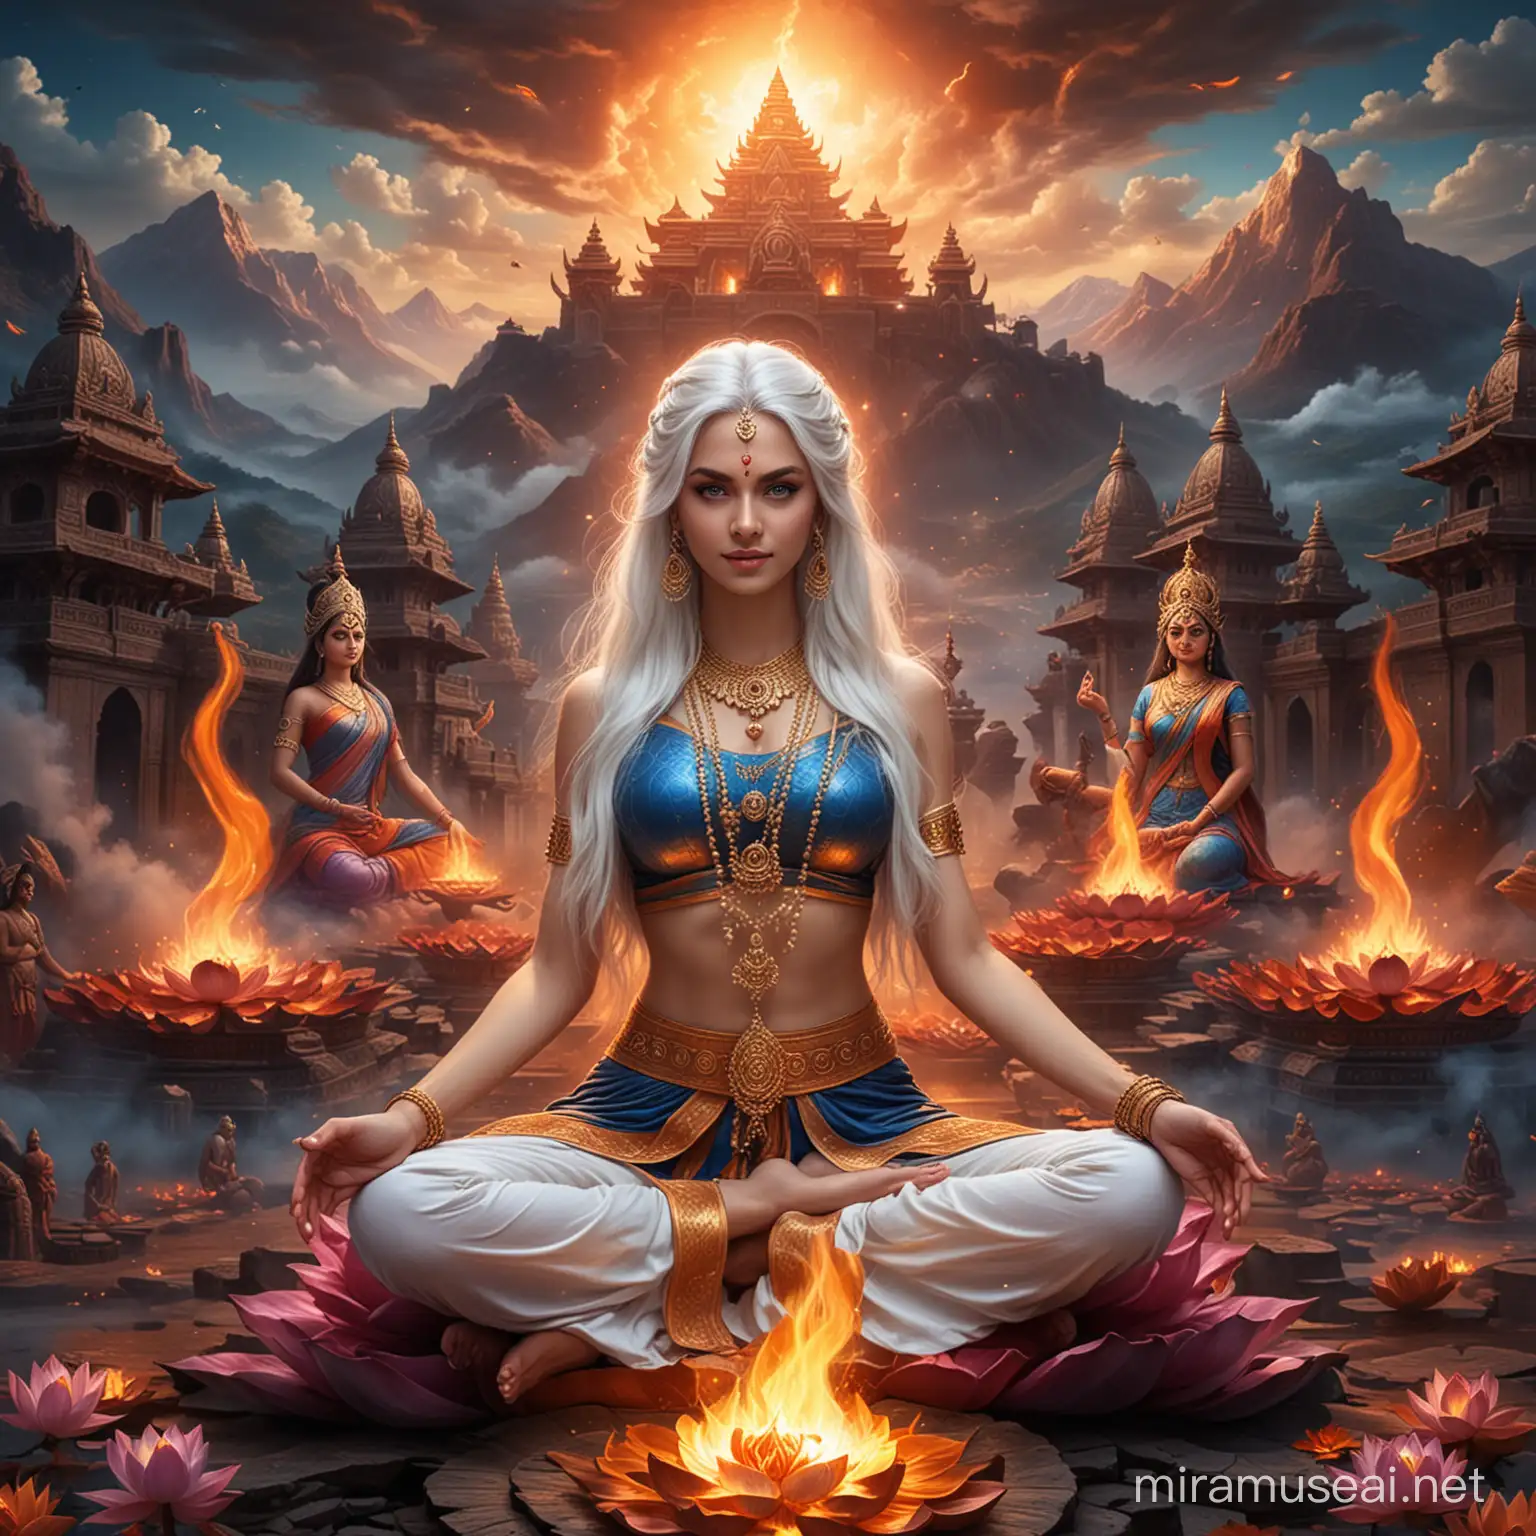 Empress Goddess in Lotus Position Amidst Hindu Mystical Symbols and Demonic Deities